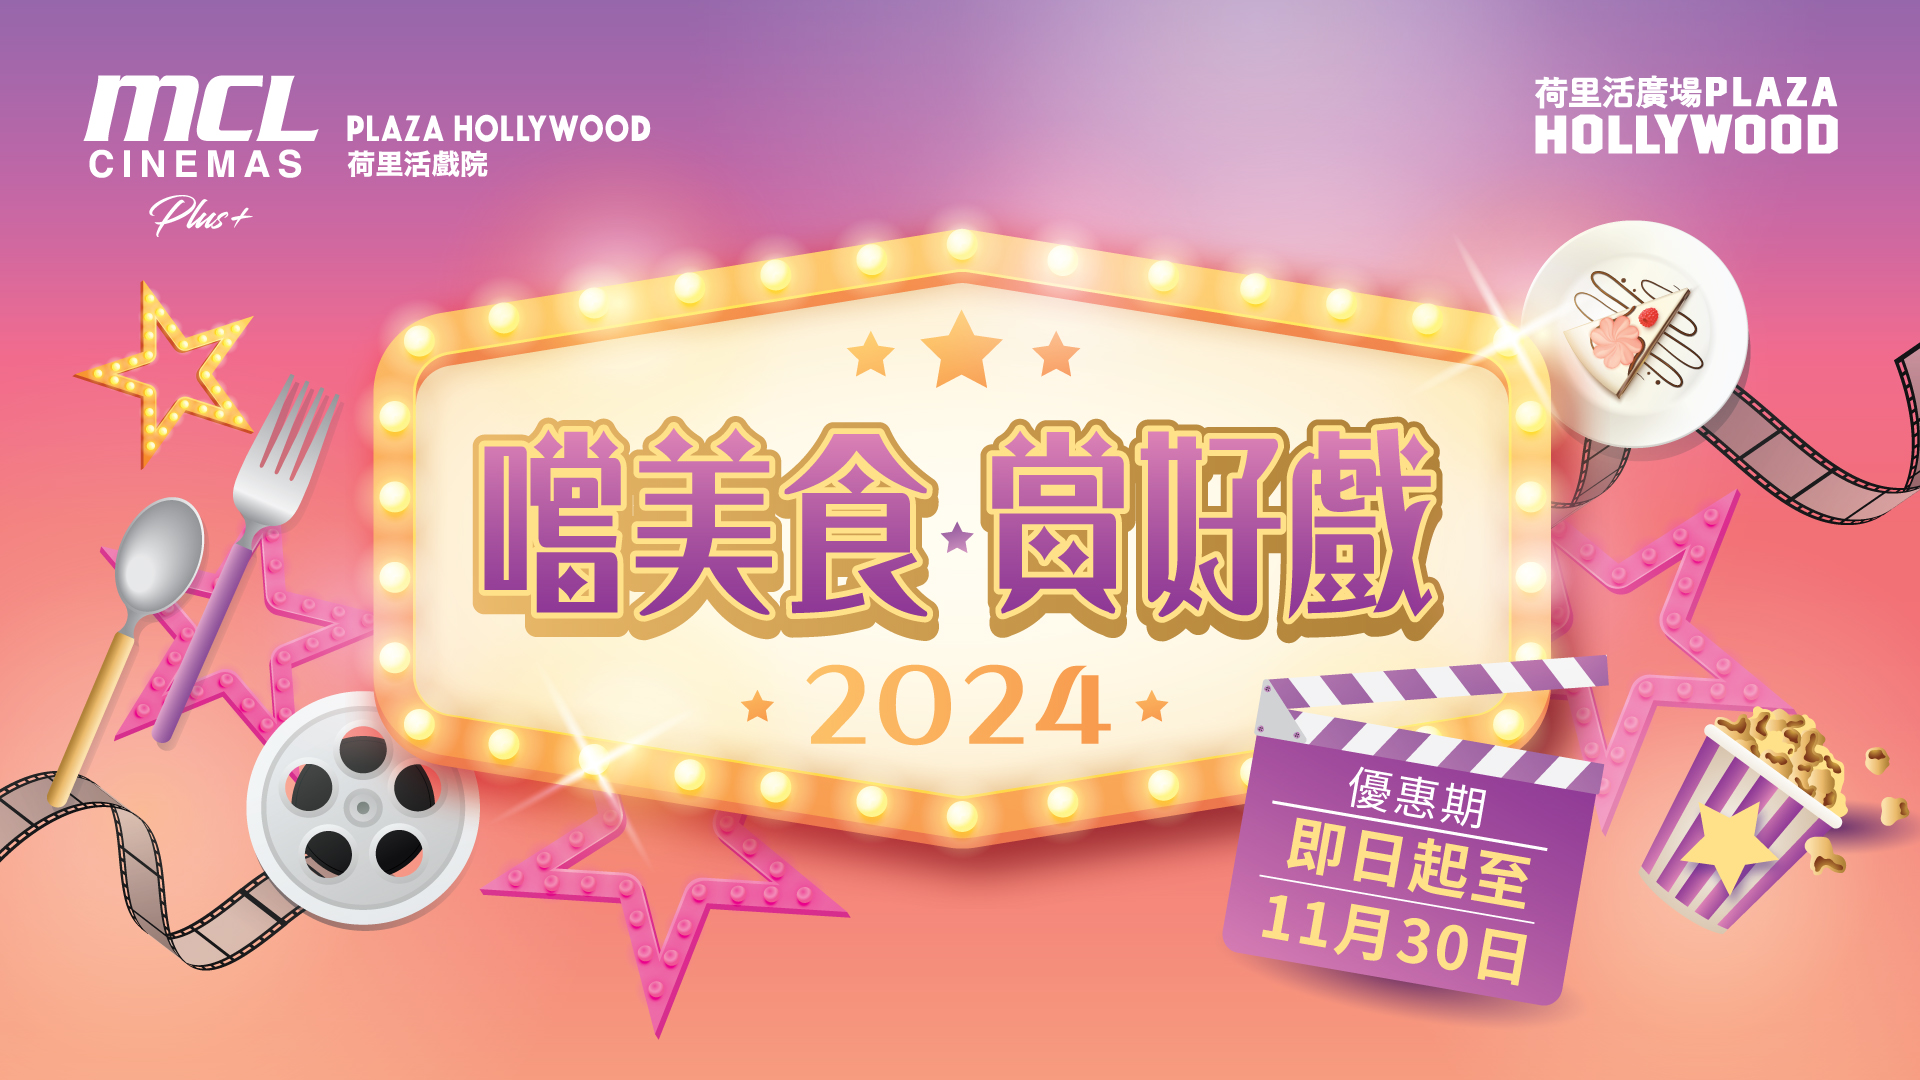 Cinema x F&B Promotion 2024